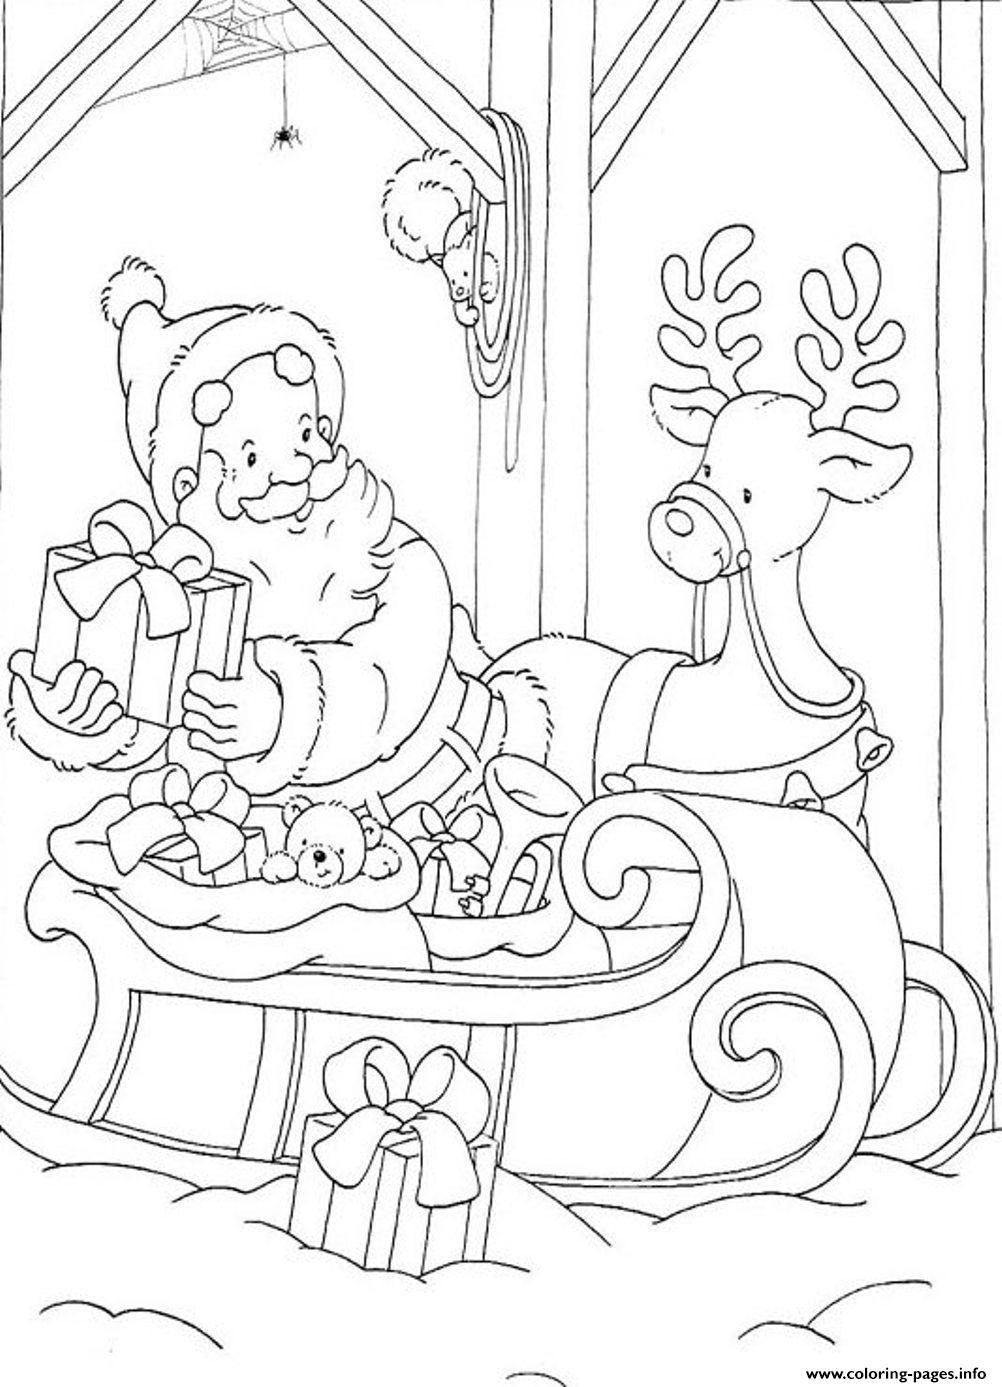 Santa S For Kids Printable Preparing Presents3bf4 coloring